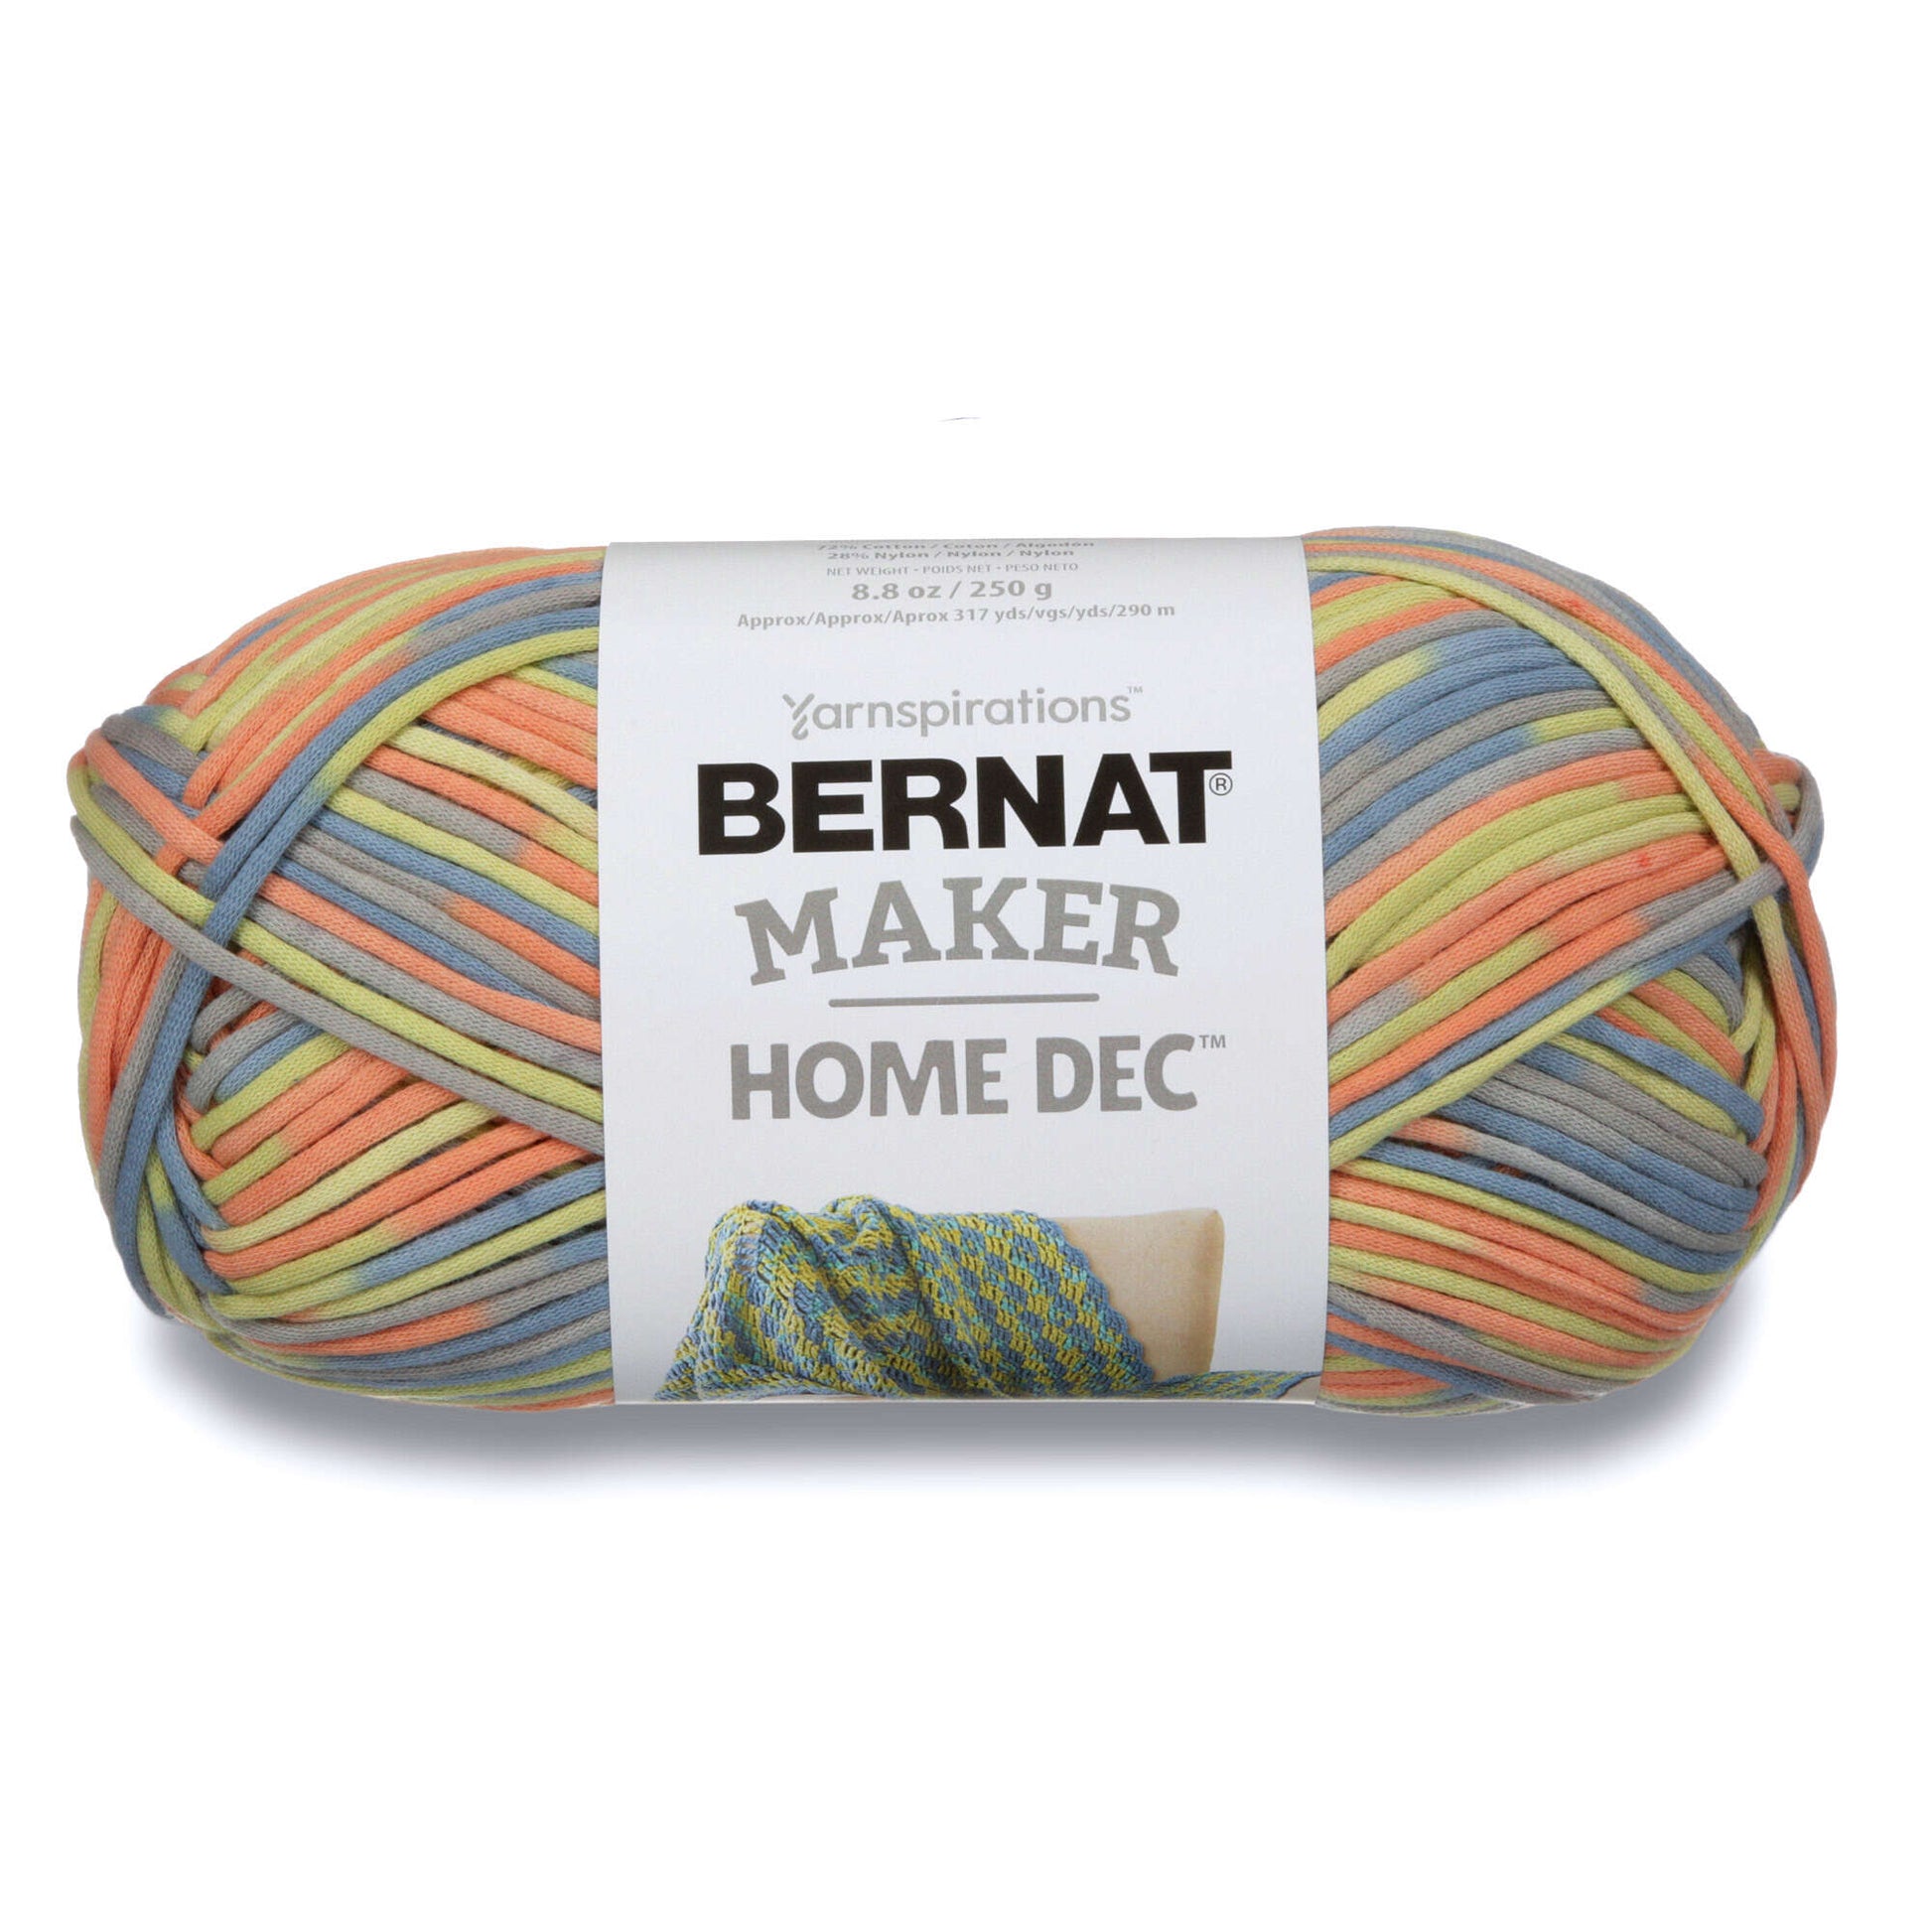 Bernat Maker Home Dec Yarn - Clearance Shades Retro Varg